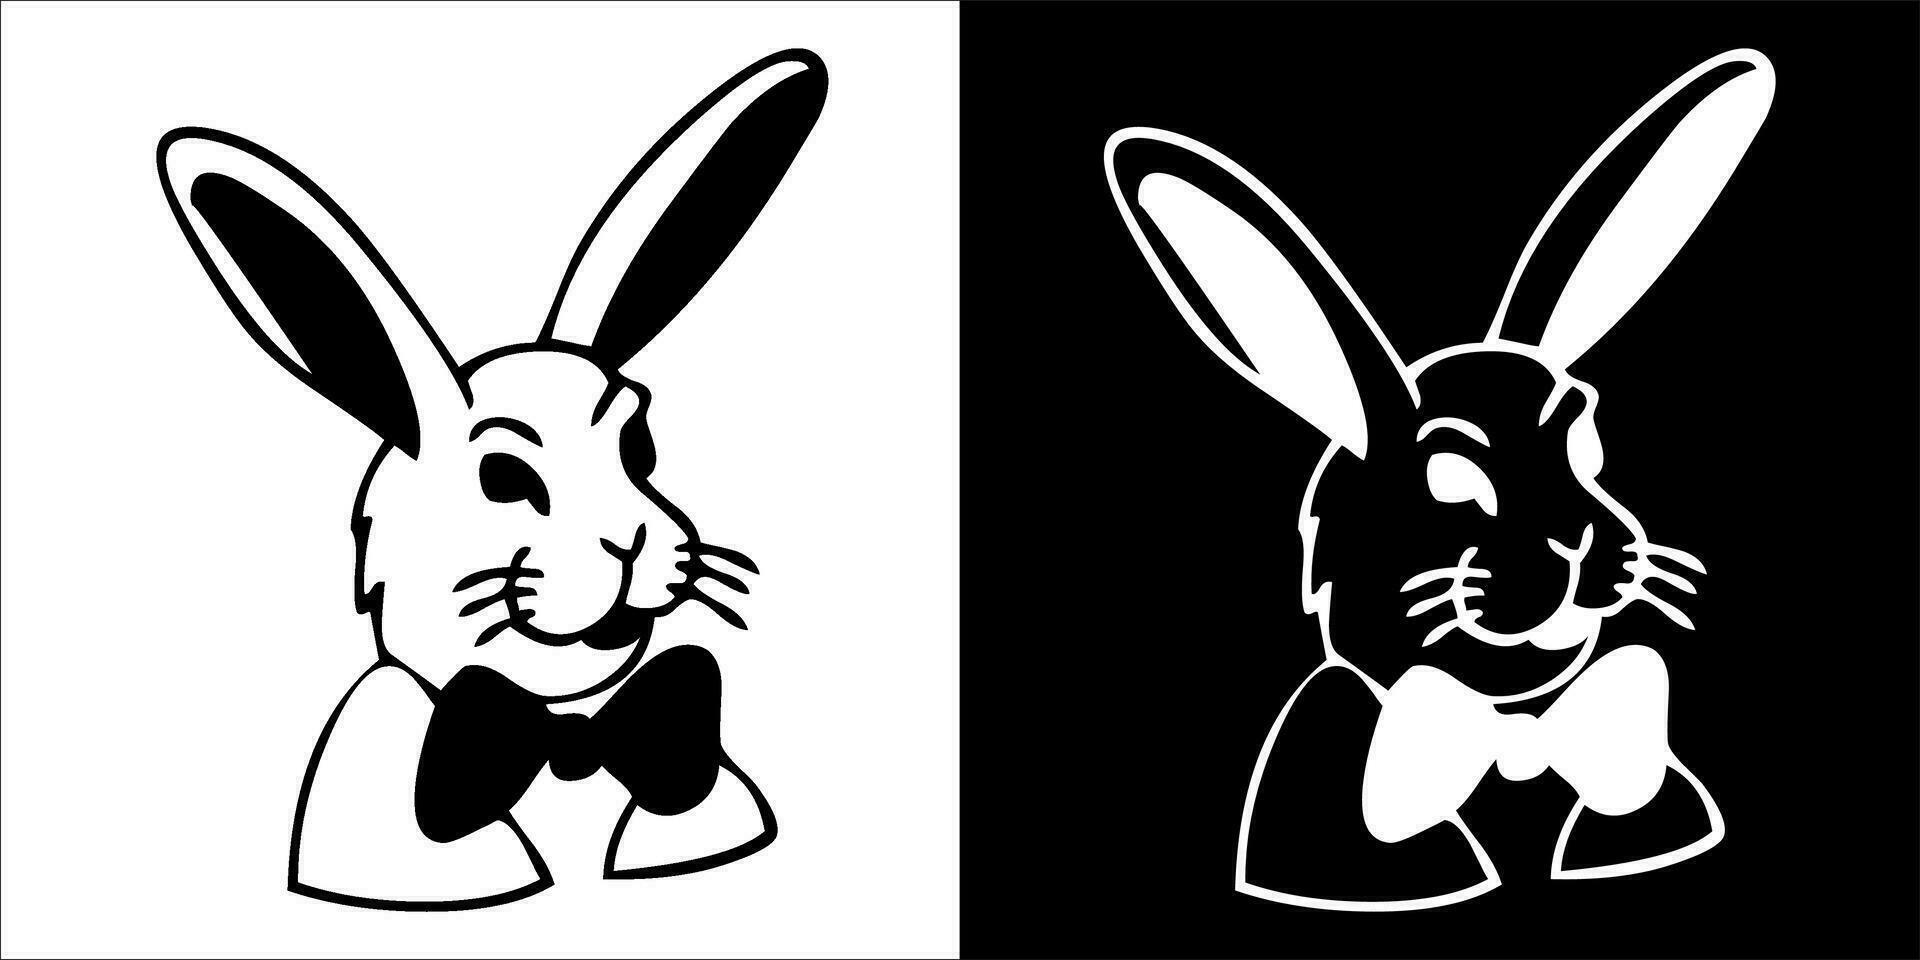 illustration, vector graphic of rabbit icon